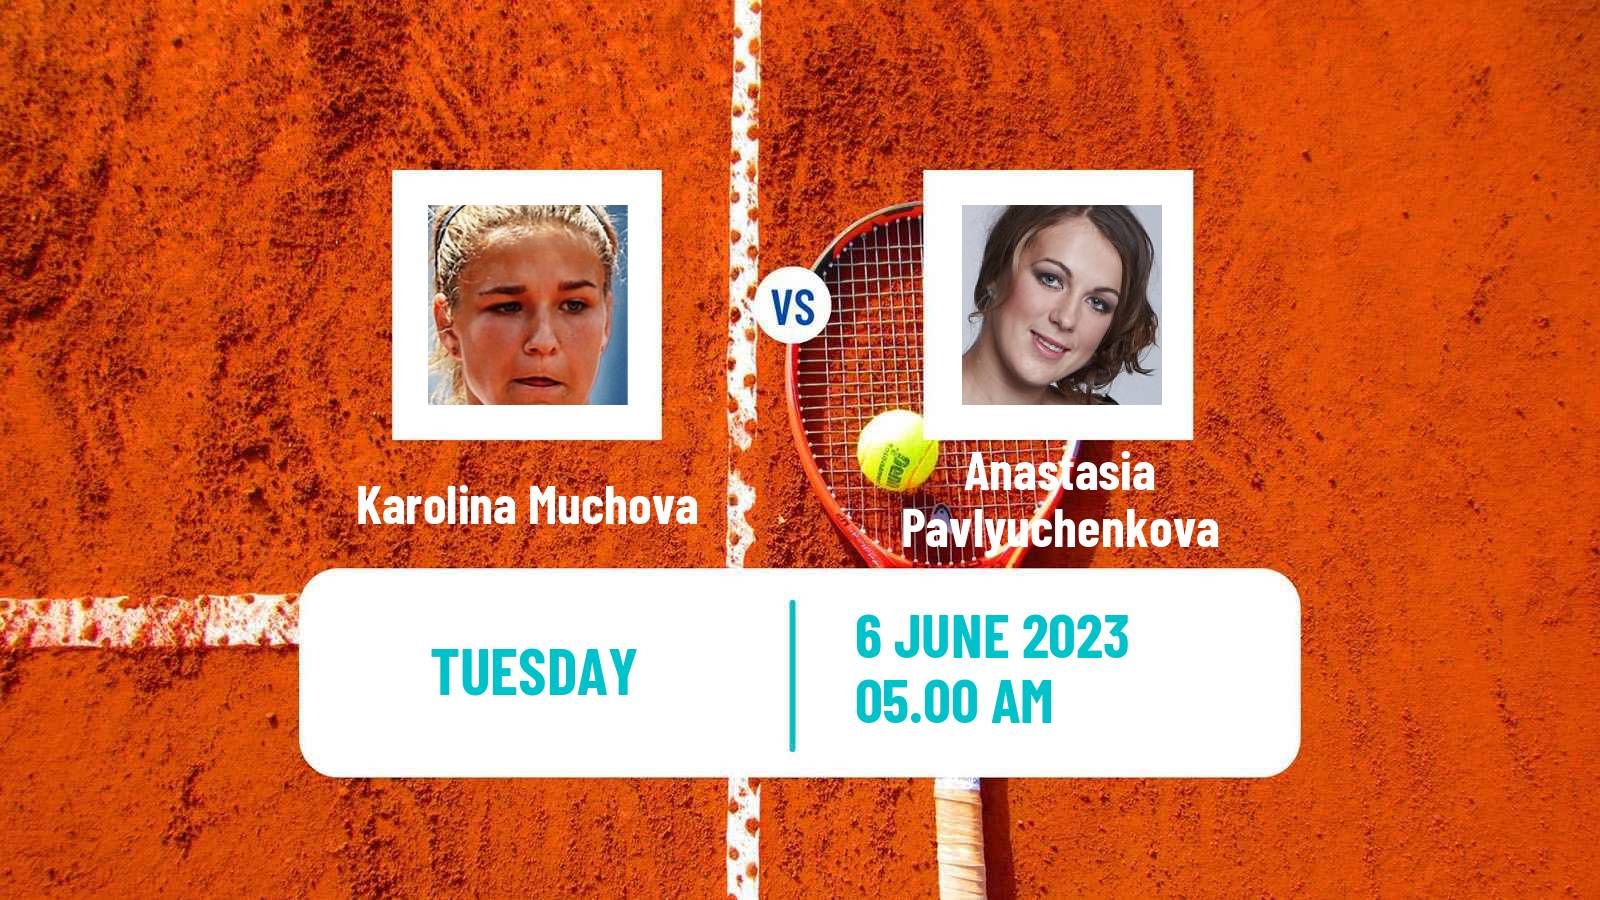 Tennis WTA Roland Garros Karolina Muchova - Anastasia Pavlyuchenkova